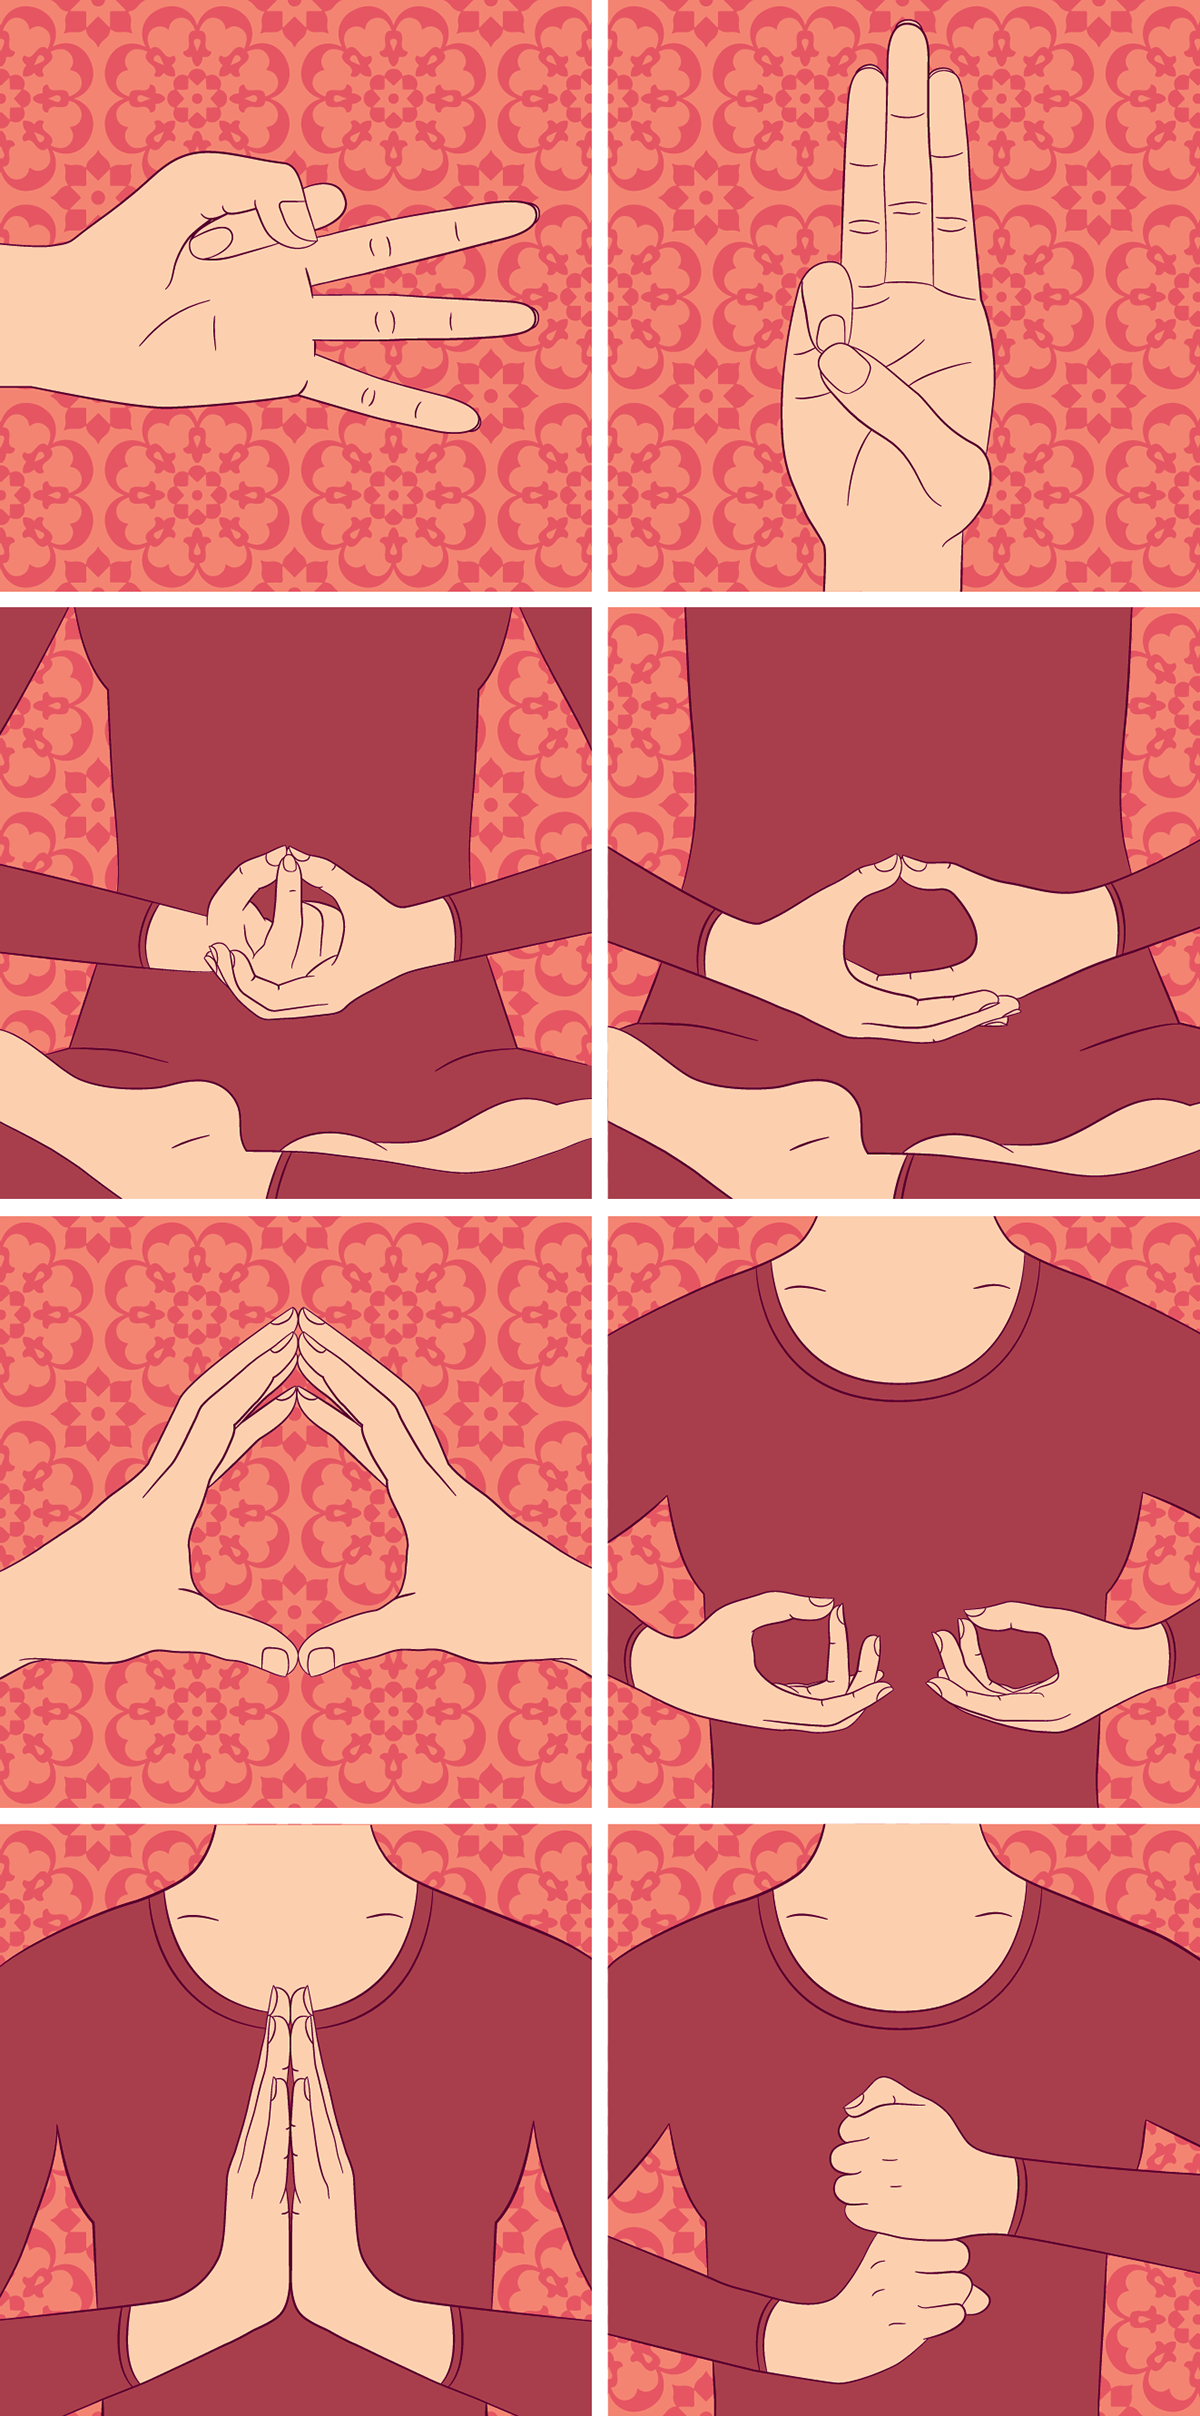 Yoga mudra Health meditation vector power relaxation hands body face India Impprintz